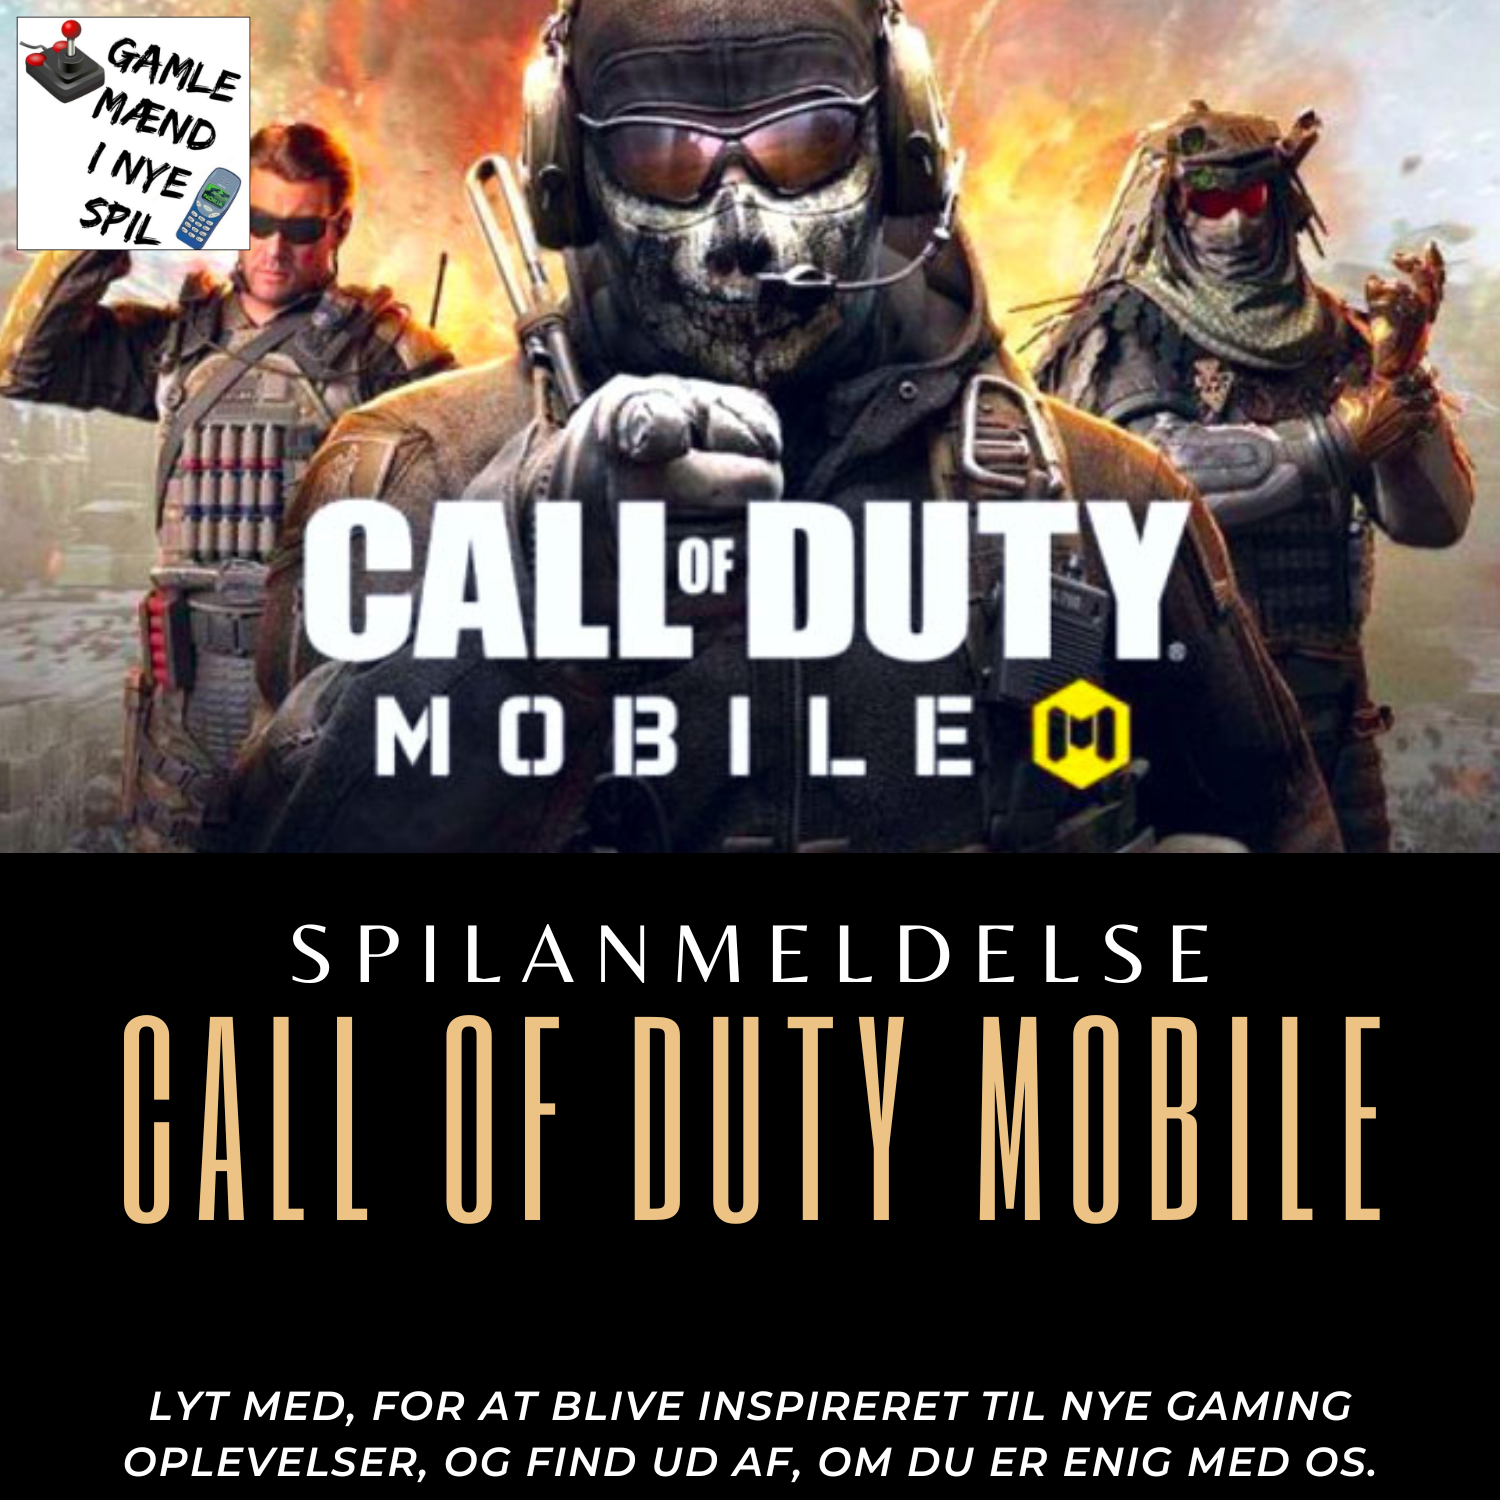 Call Of Duty Mobile, er det bare en pengemaskine. Lyt til denne anmeldelse, for at blive klogere.